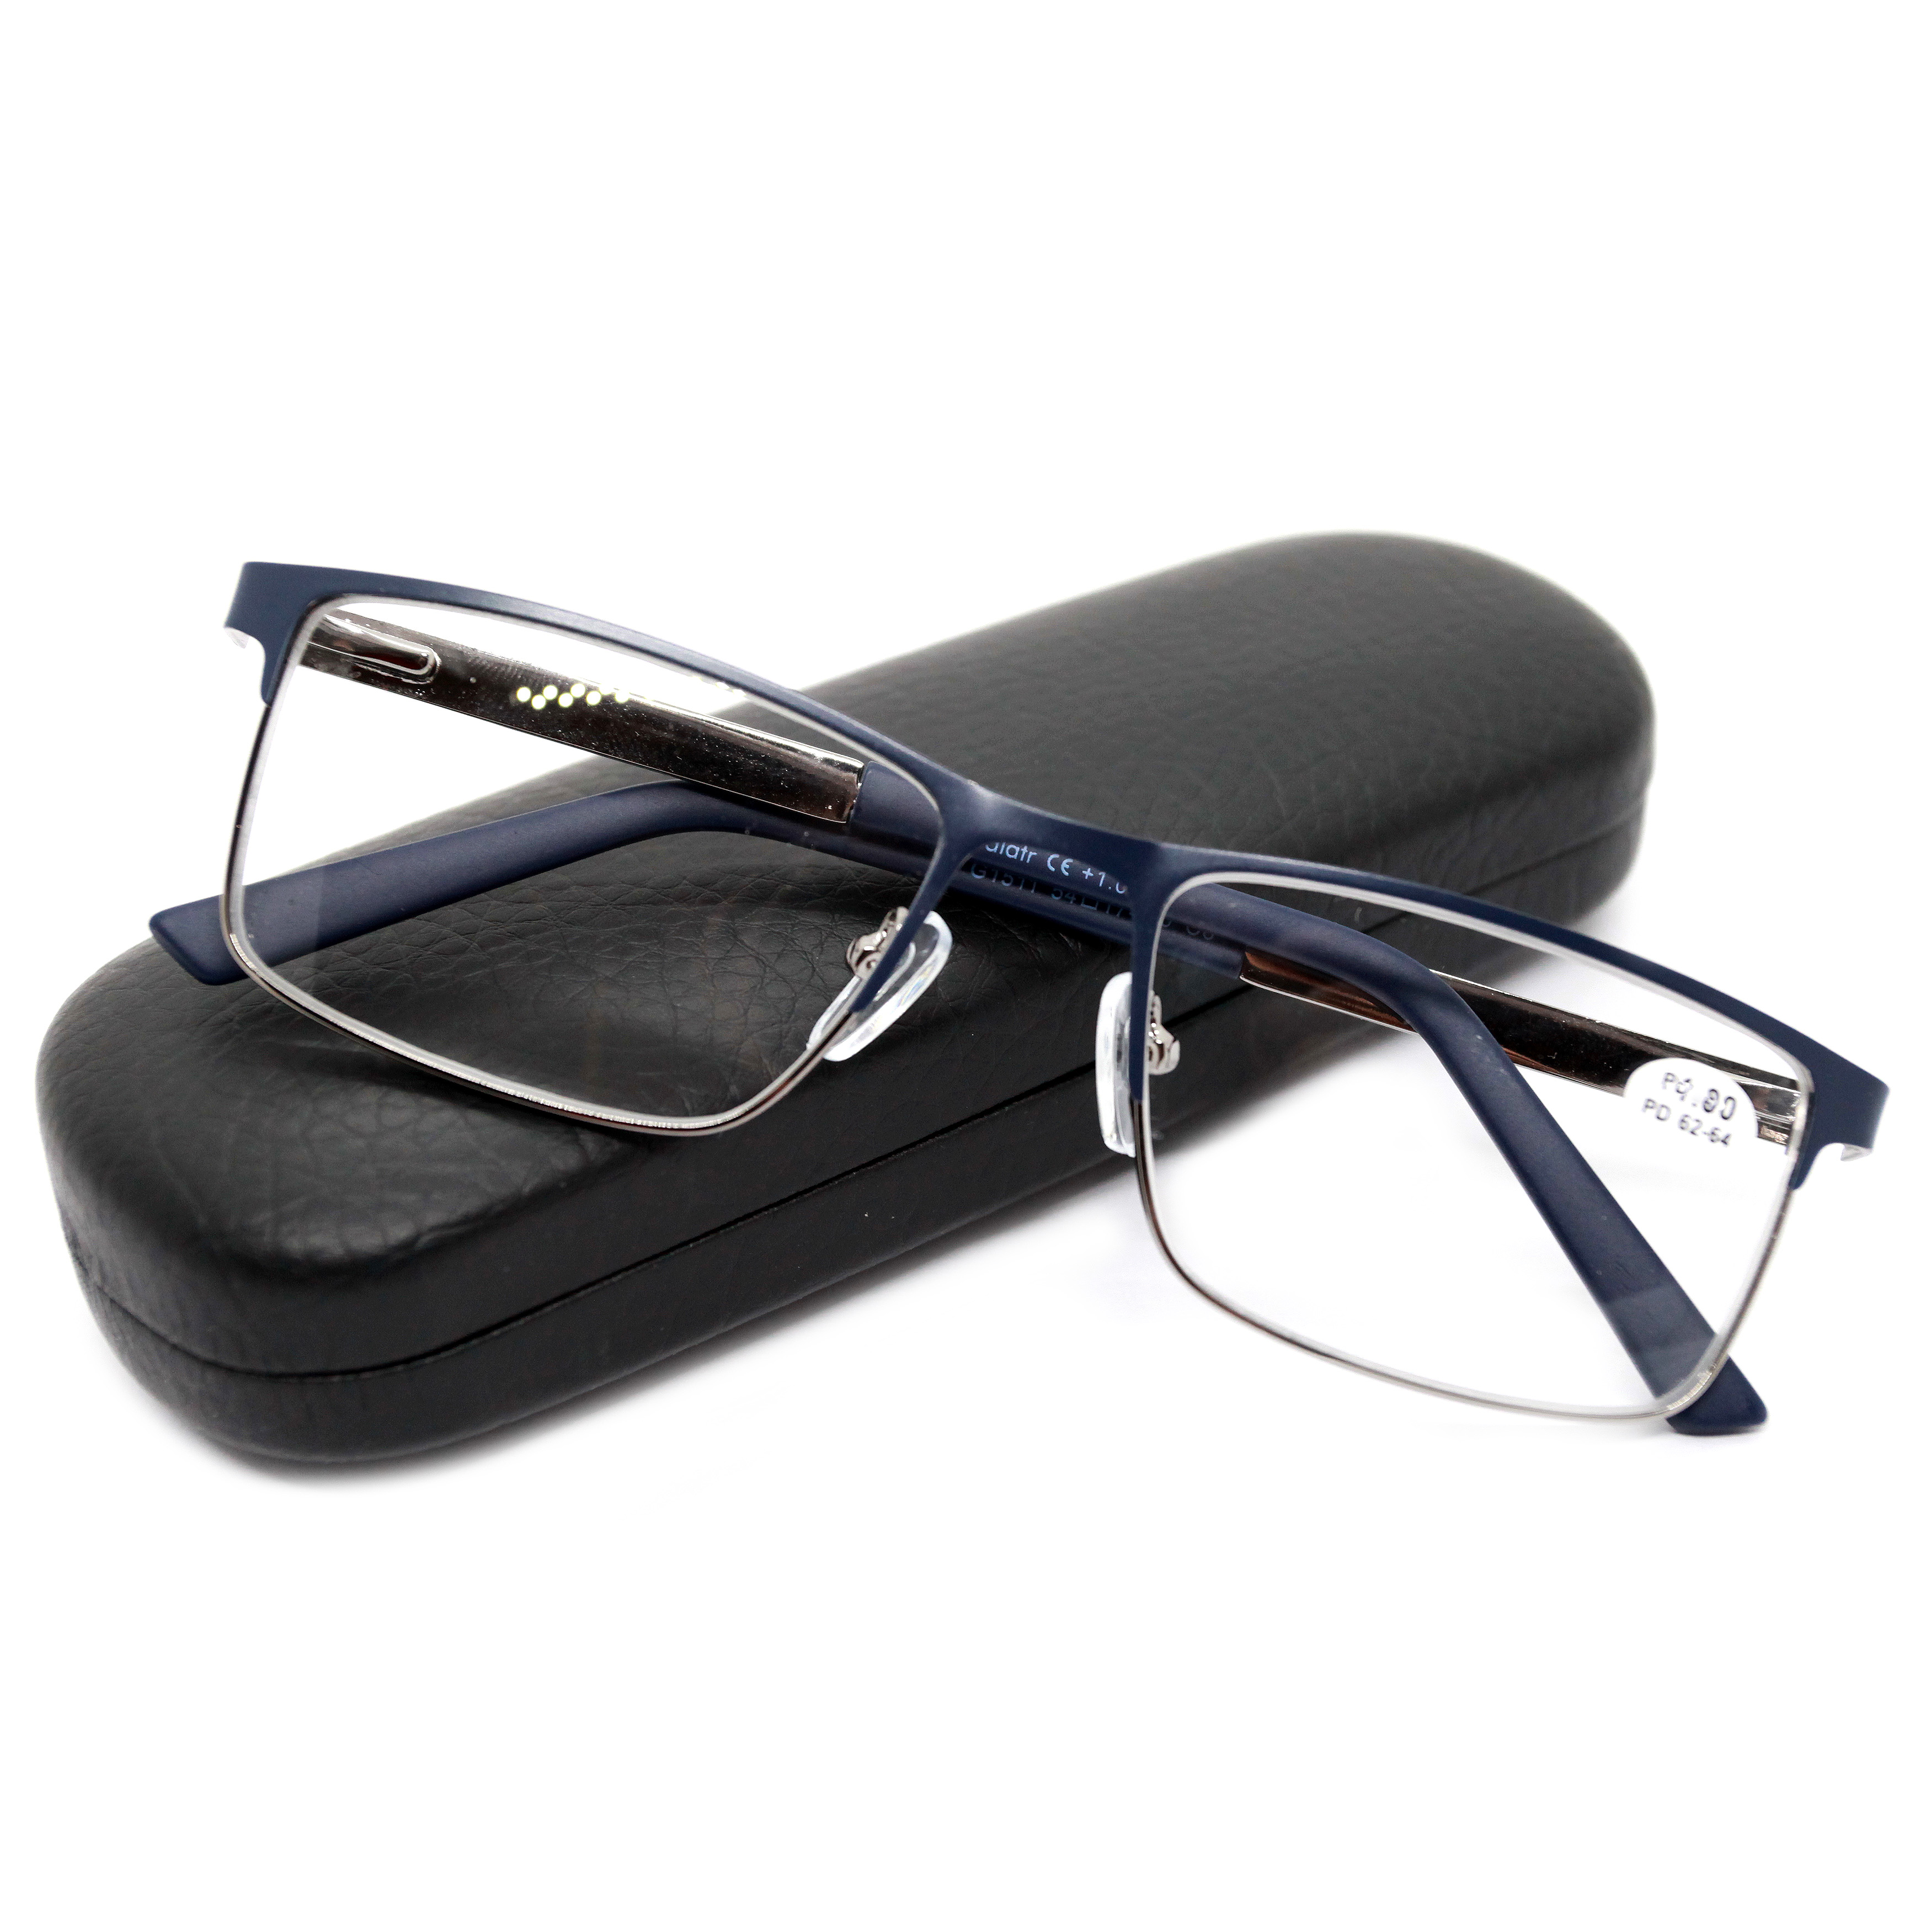 Готовые очки для зрения Glodiatr 1511 -4,50, c футляром, синий, РЦ 62-64